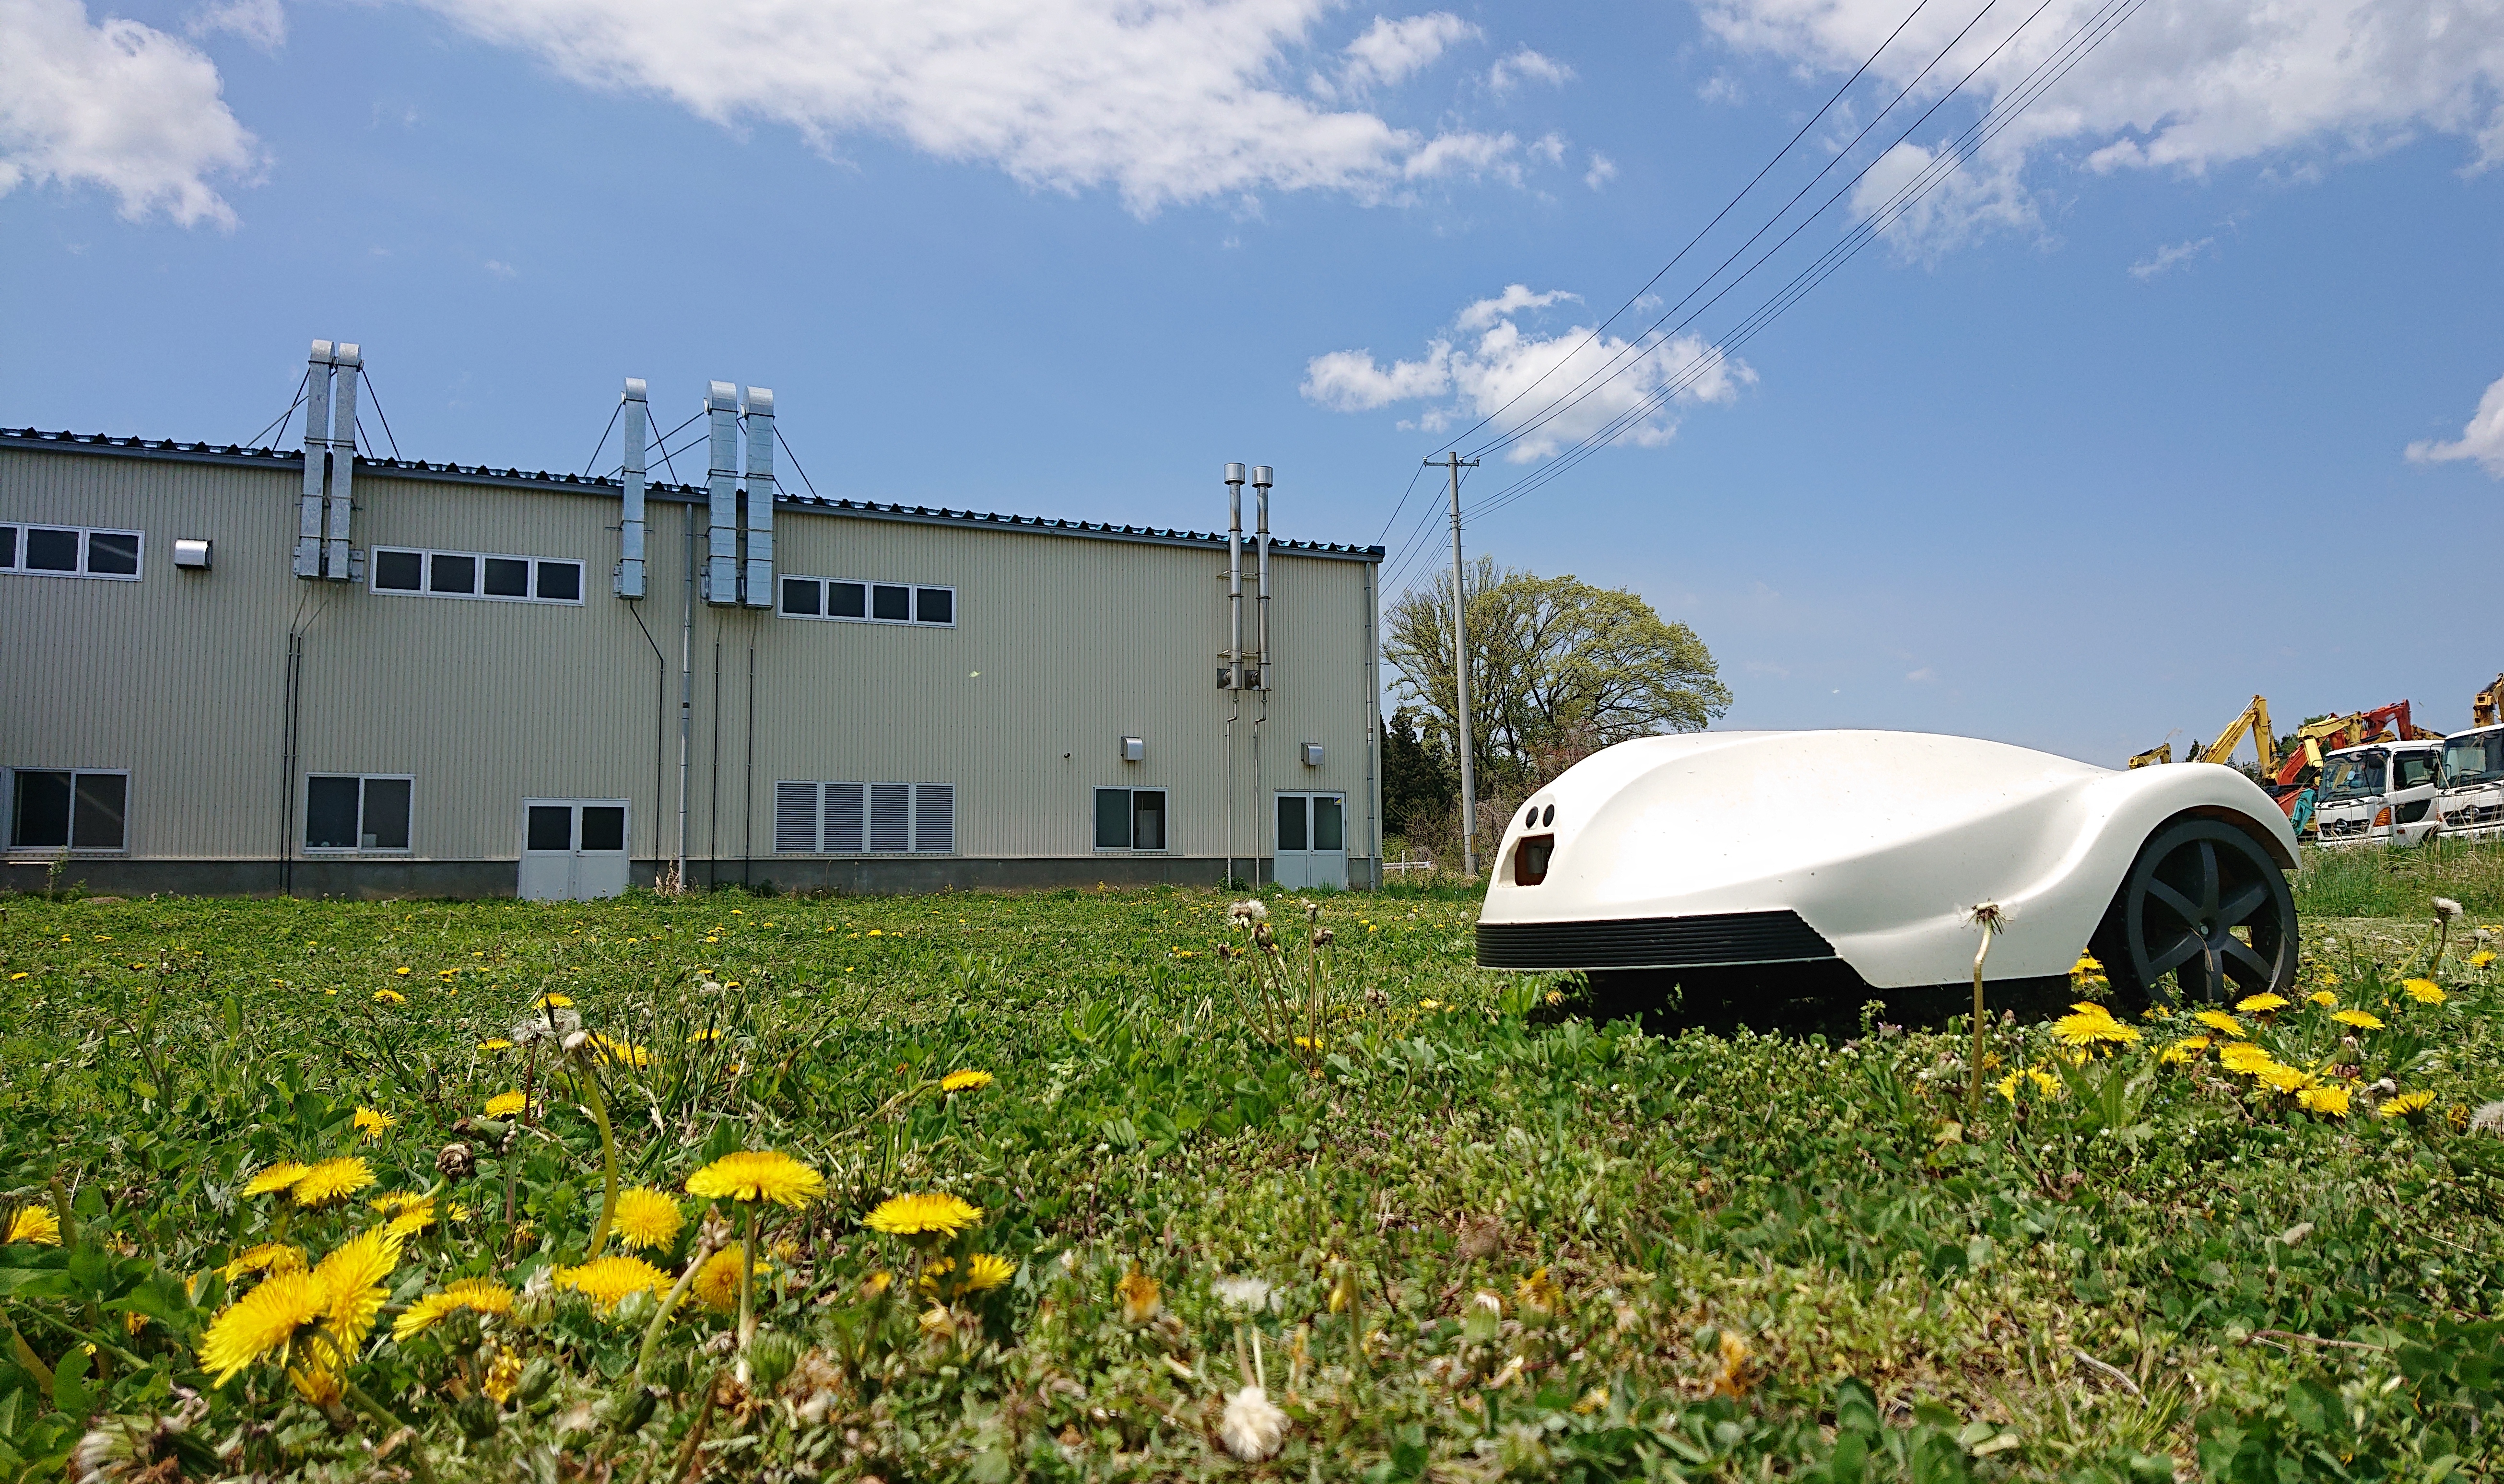 Wado ロボット草刈機 Kronos の予約受付を発表 除雪機 草刈機 産業機器メーカーの和同産業株式会社